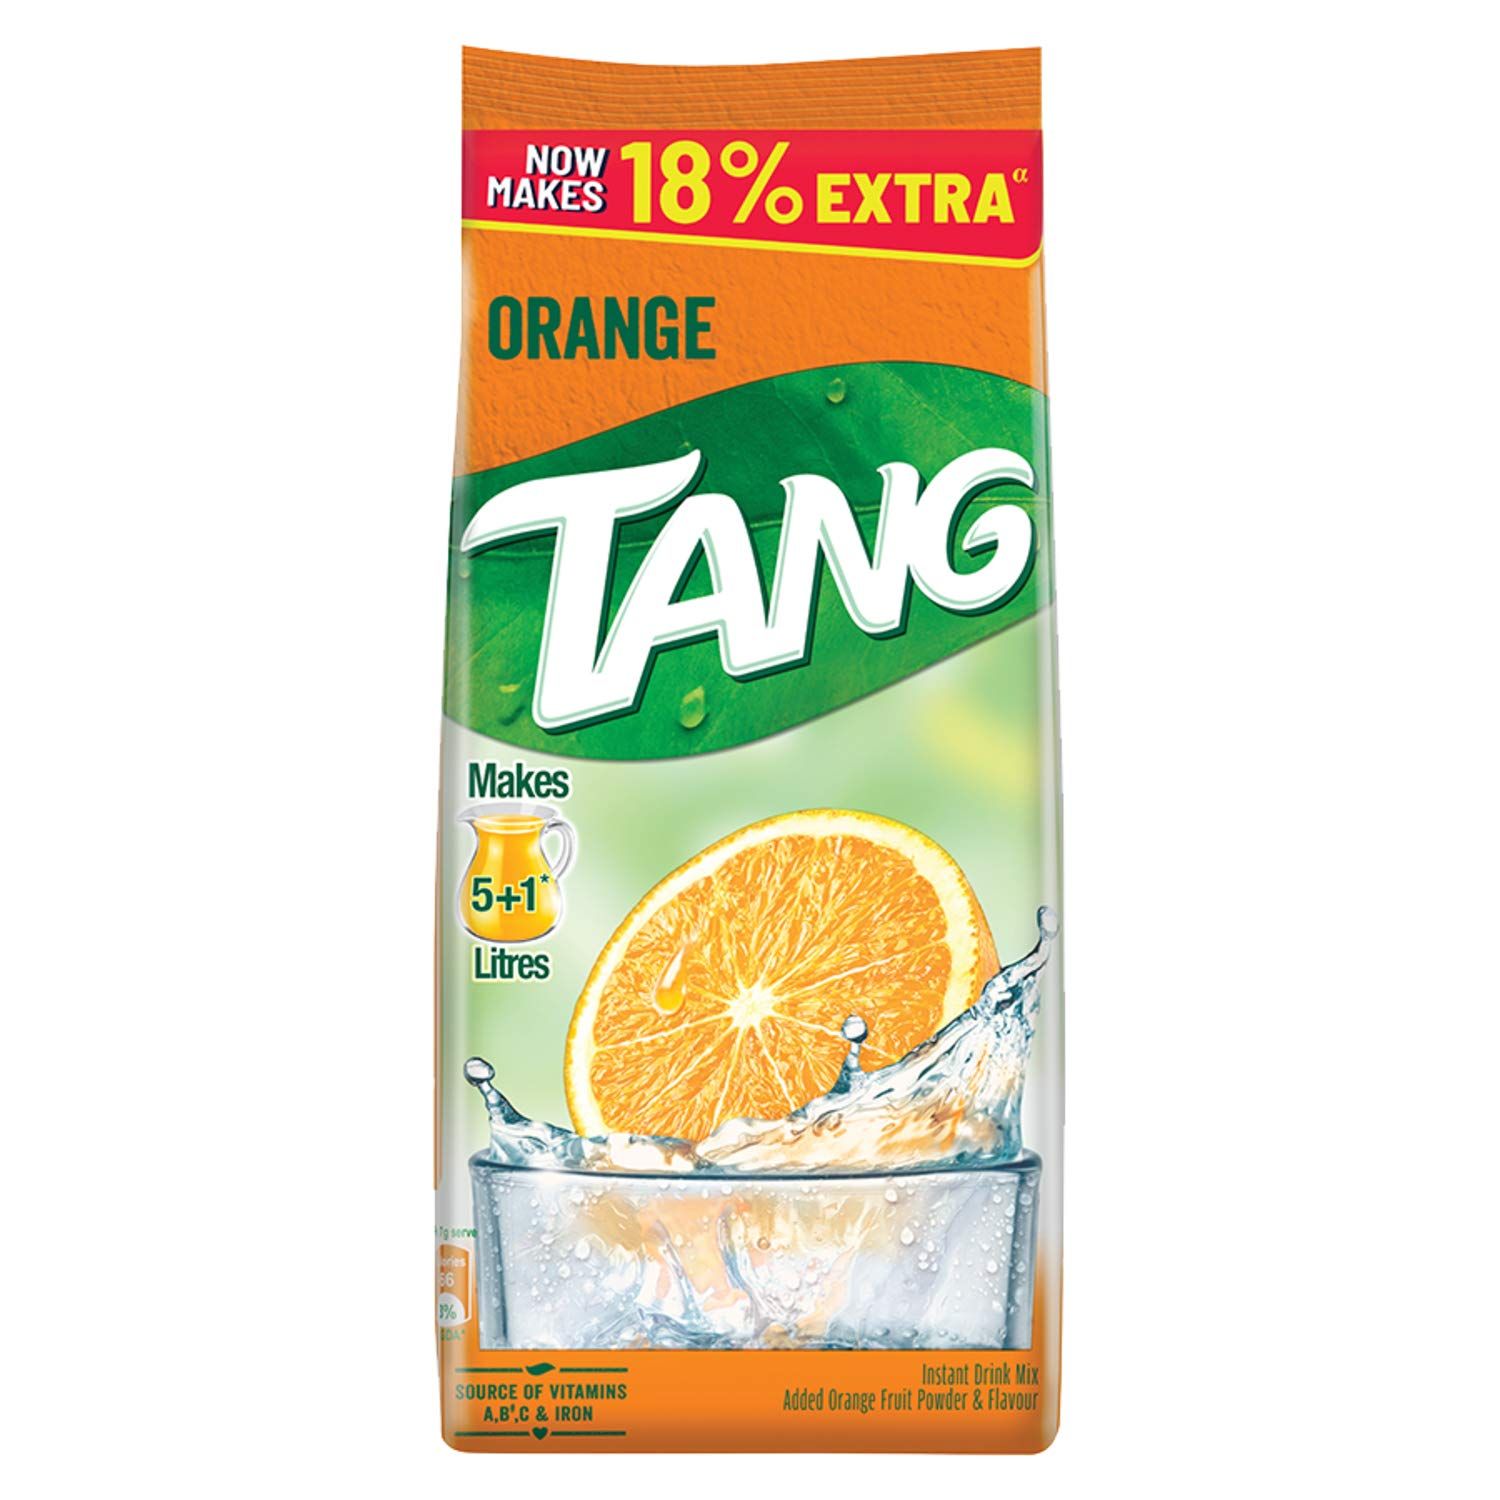 Tang Vitamin C Enriched Instant Drink Mix Orange Image